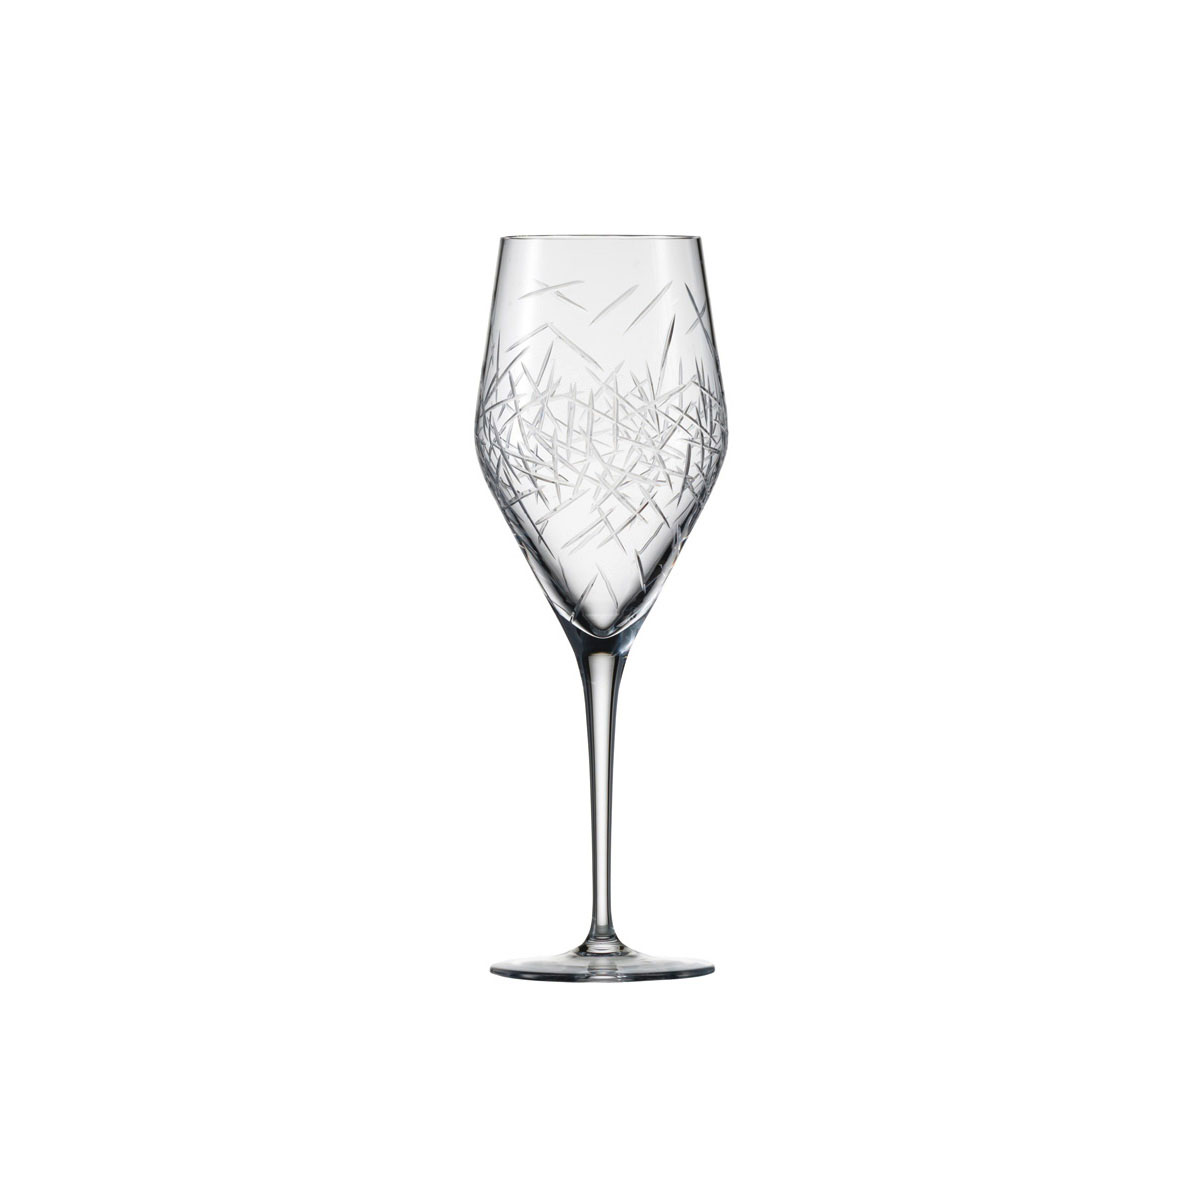 Schott Zwiesel Tritan Crystal, 1872 Charles Schumann Hommage Glace Allround Crystal Wine Glass, Single